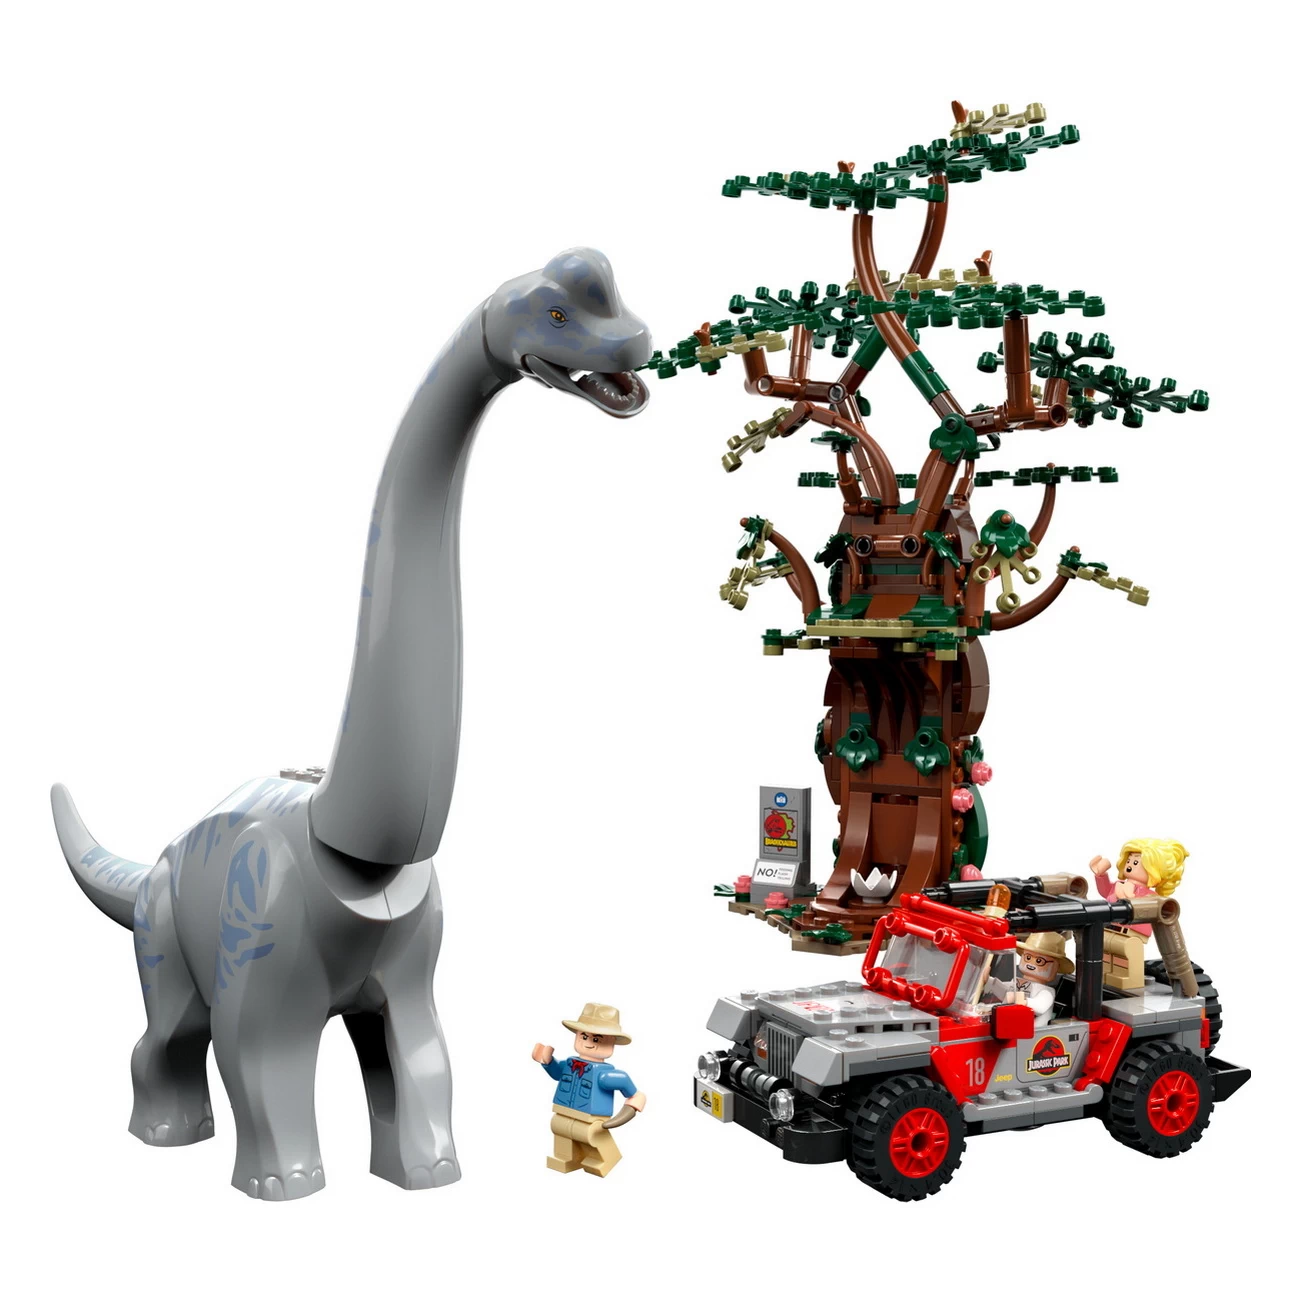 LEGO Jurassic Park - Entdeckung des Brachiosaurus (76960)